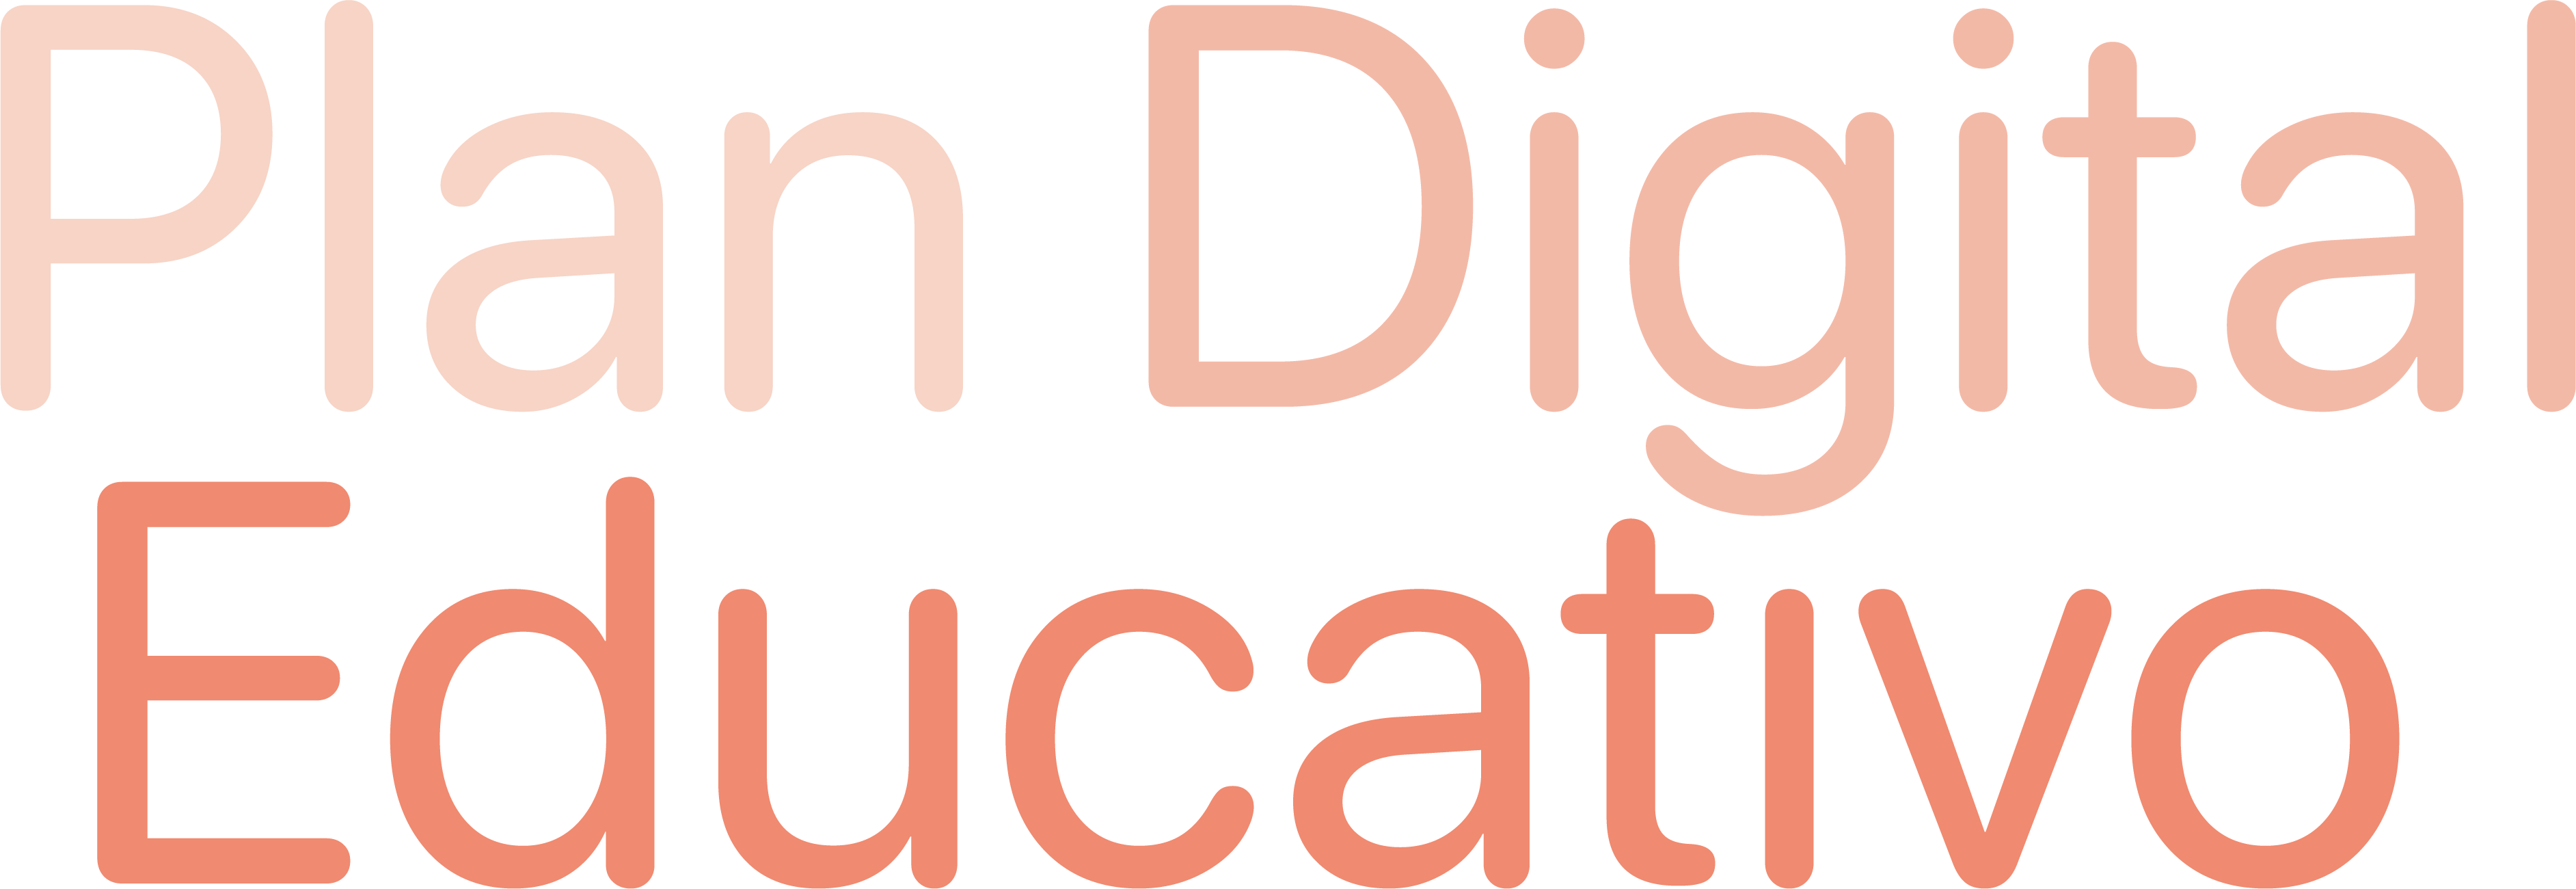 Logo_Plan digital educativo